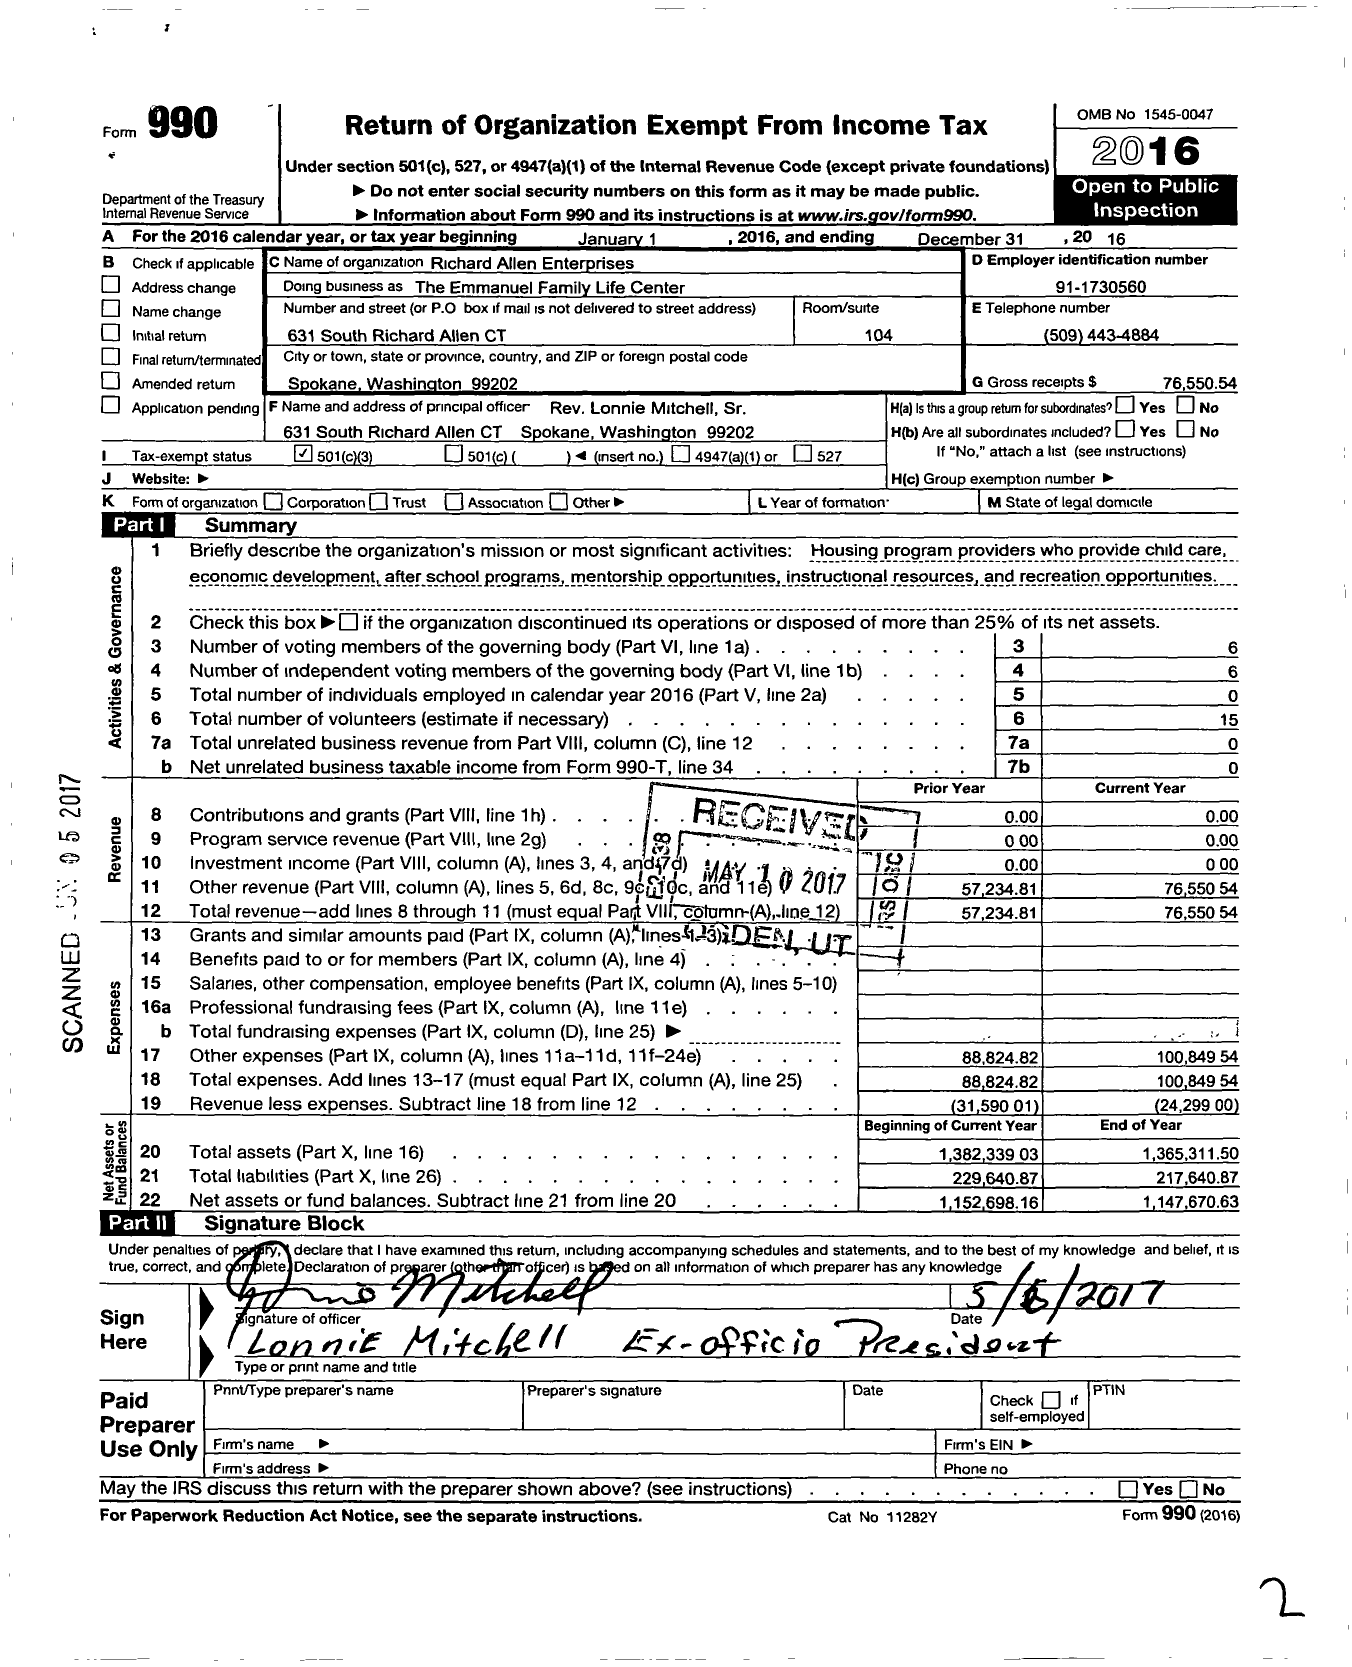 Image of first page of 2016 Form 990 for Richard Allen Enterprises